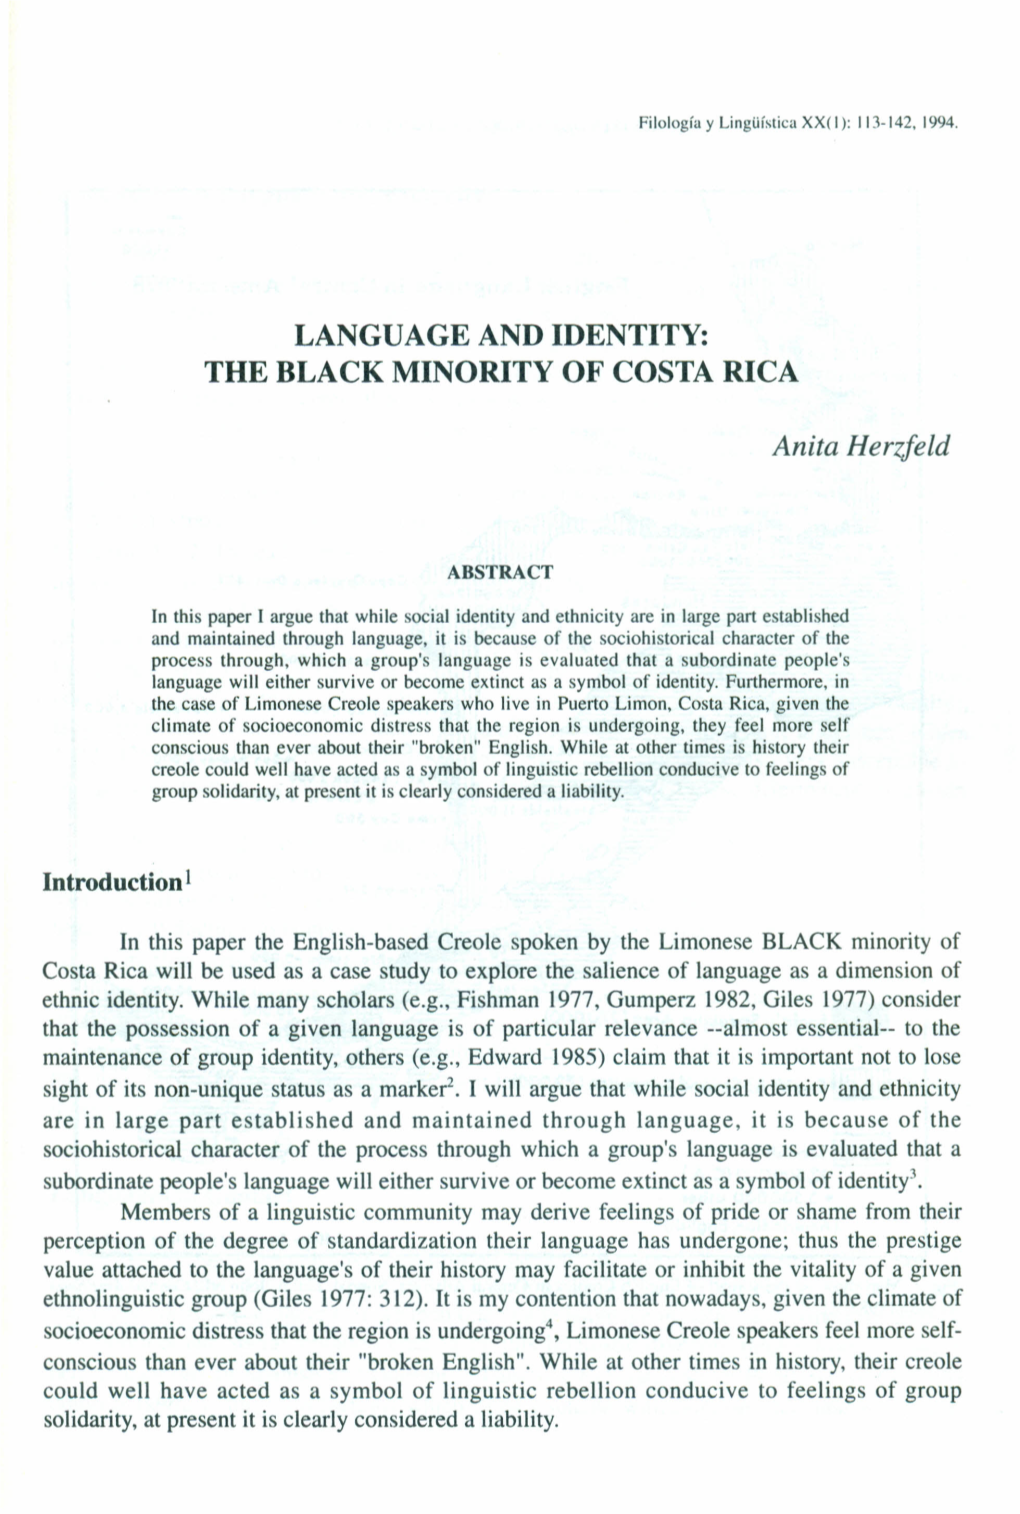 Language and Identity: the Black Minority of Costa Rica